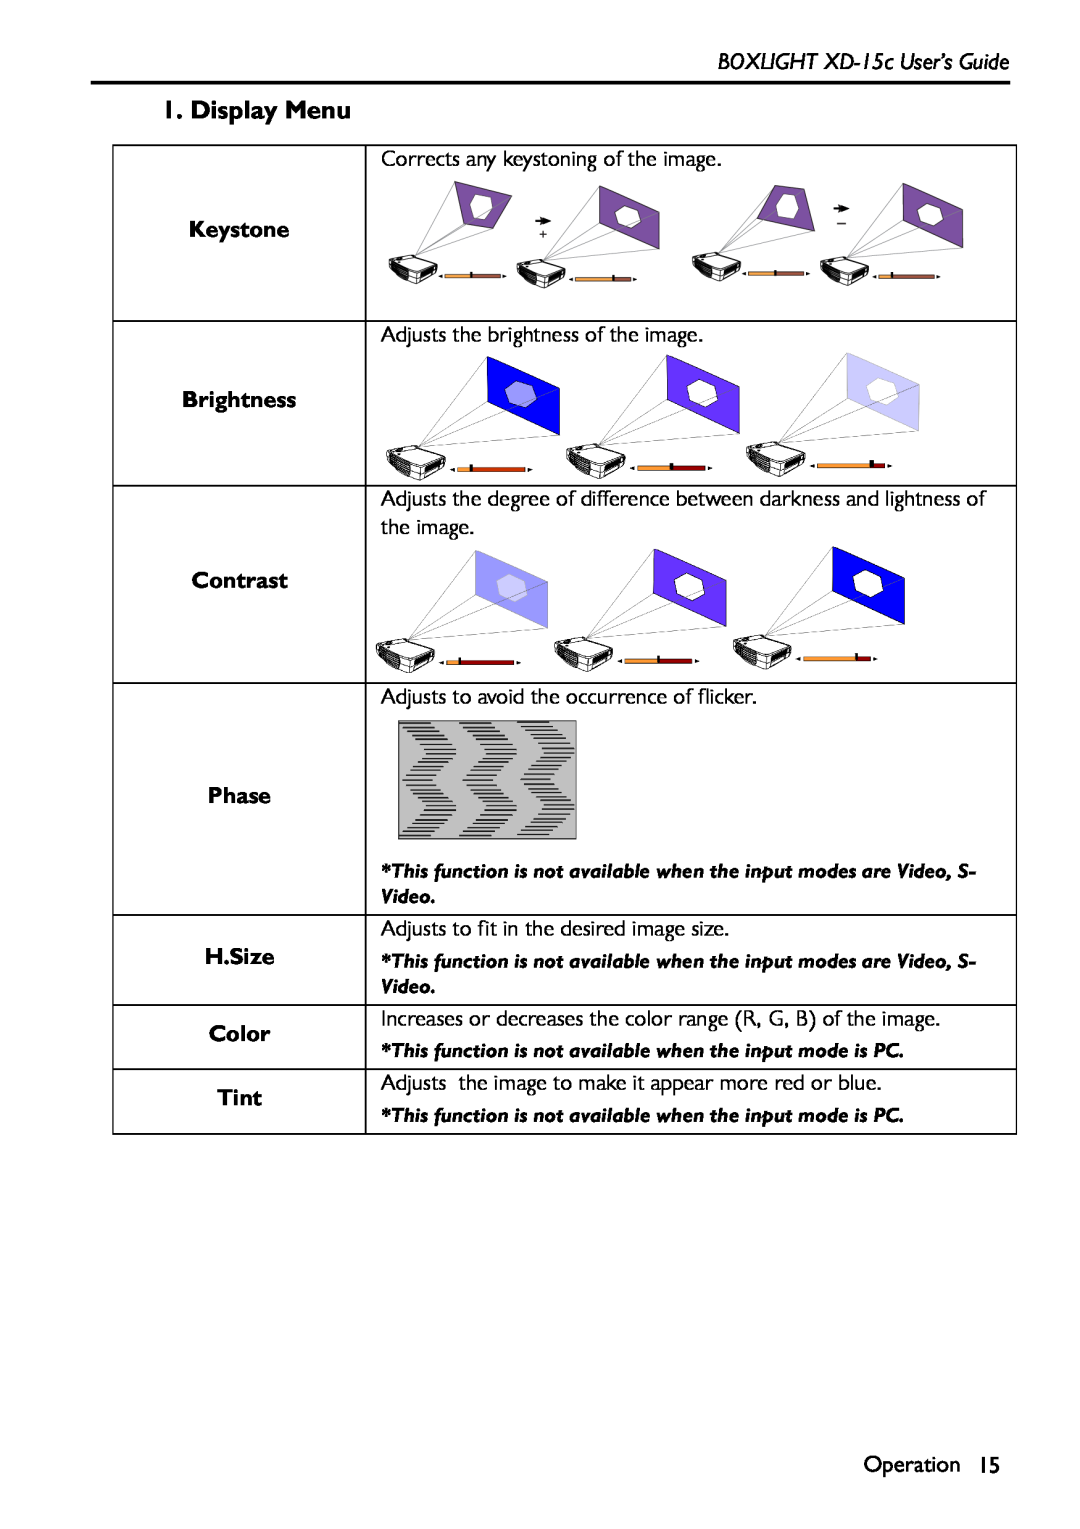 BOXLIGHT manual Display Menu, BOXLIGHT XD-15c User’s Guide, Contrast, H.Size, Color, Tint 